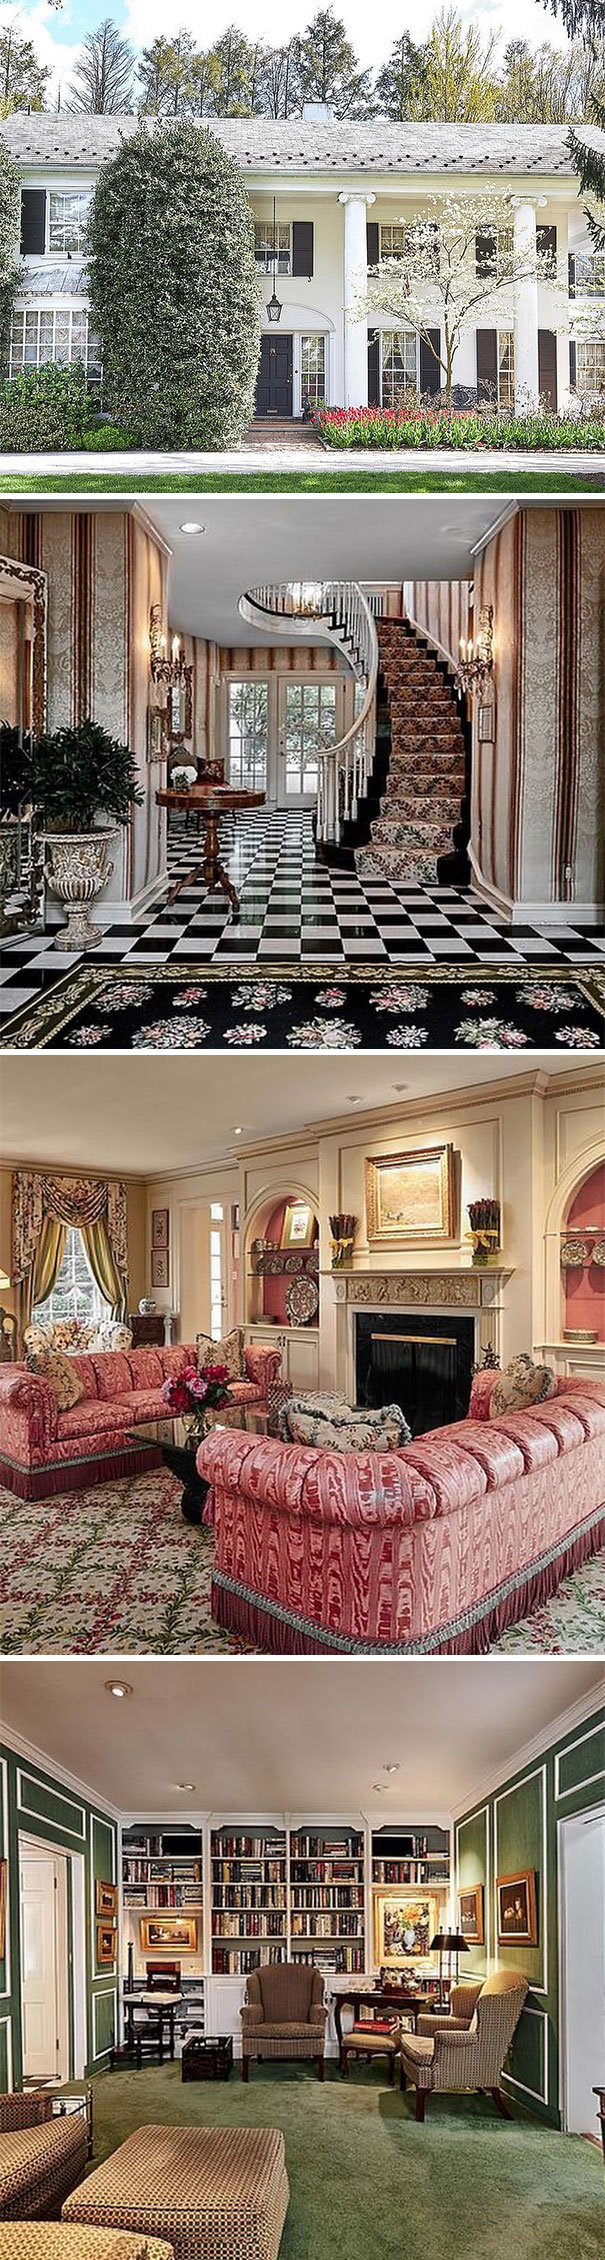 This Dorothy Draper Designed Home Is Art. $1,750,000